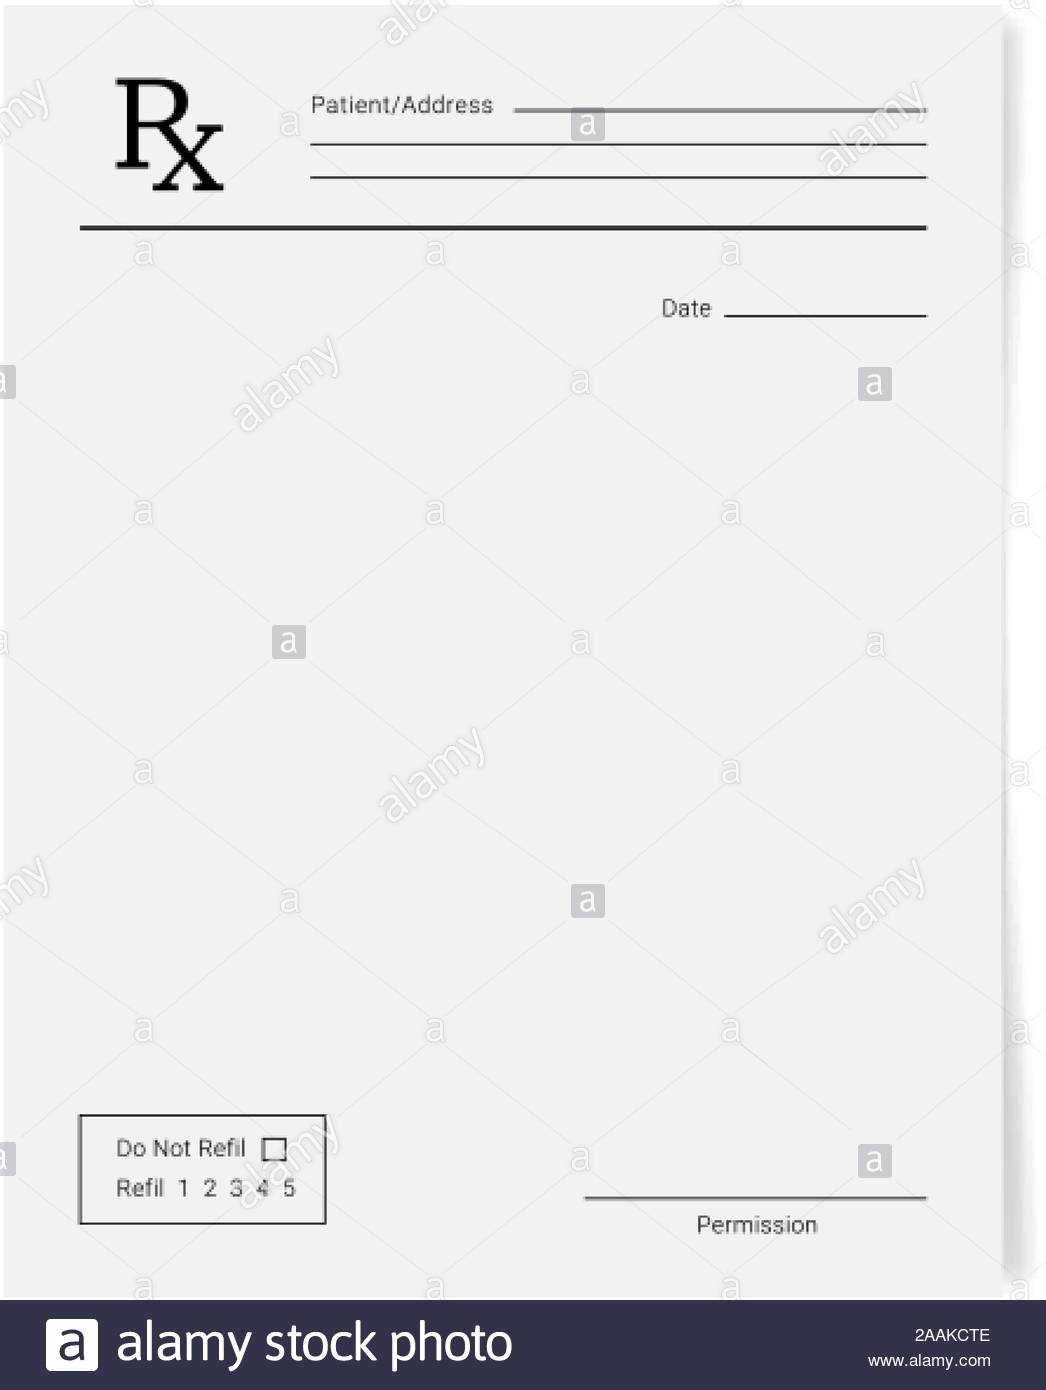 Rx Pad Template. Medical Regular Prescription Form Stock With Regard To Blank Prescription Pad Template